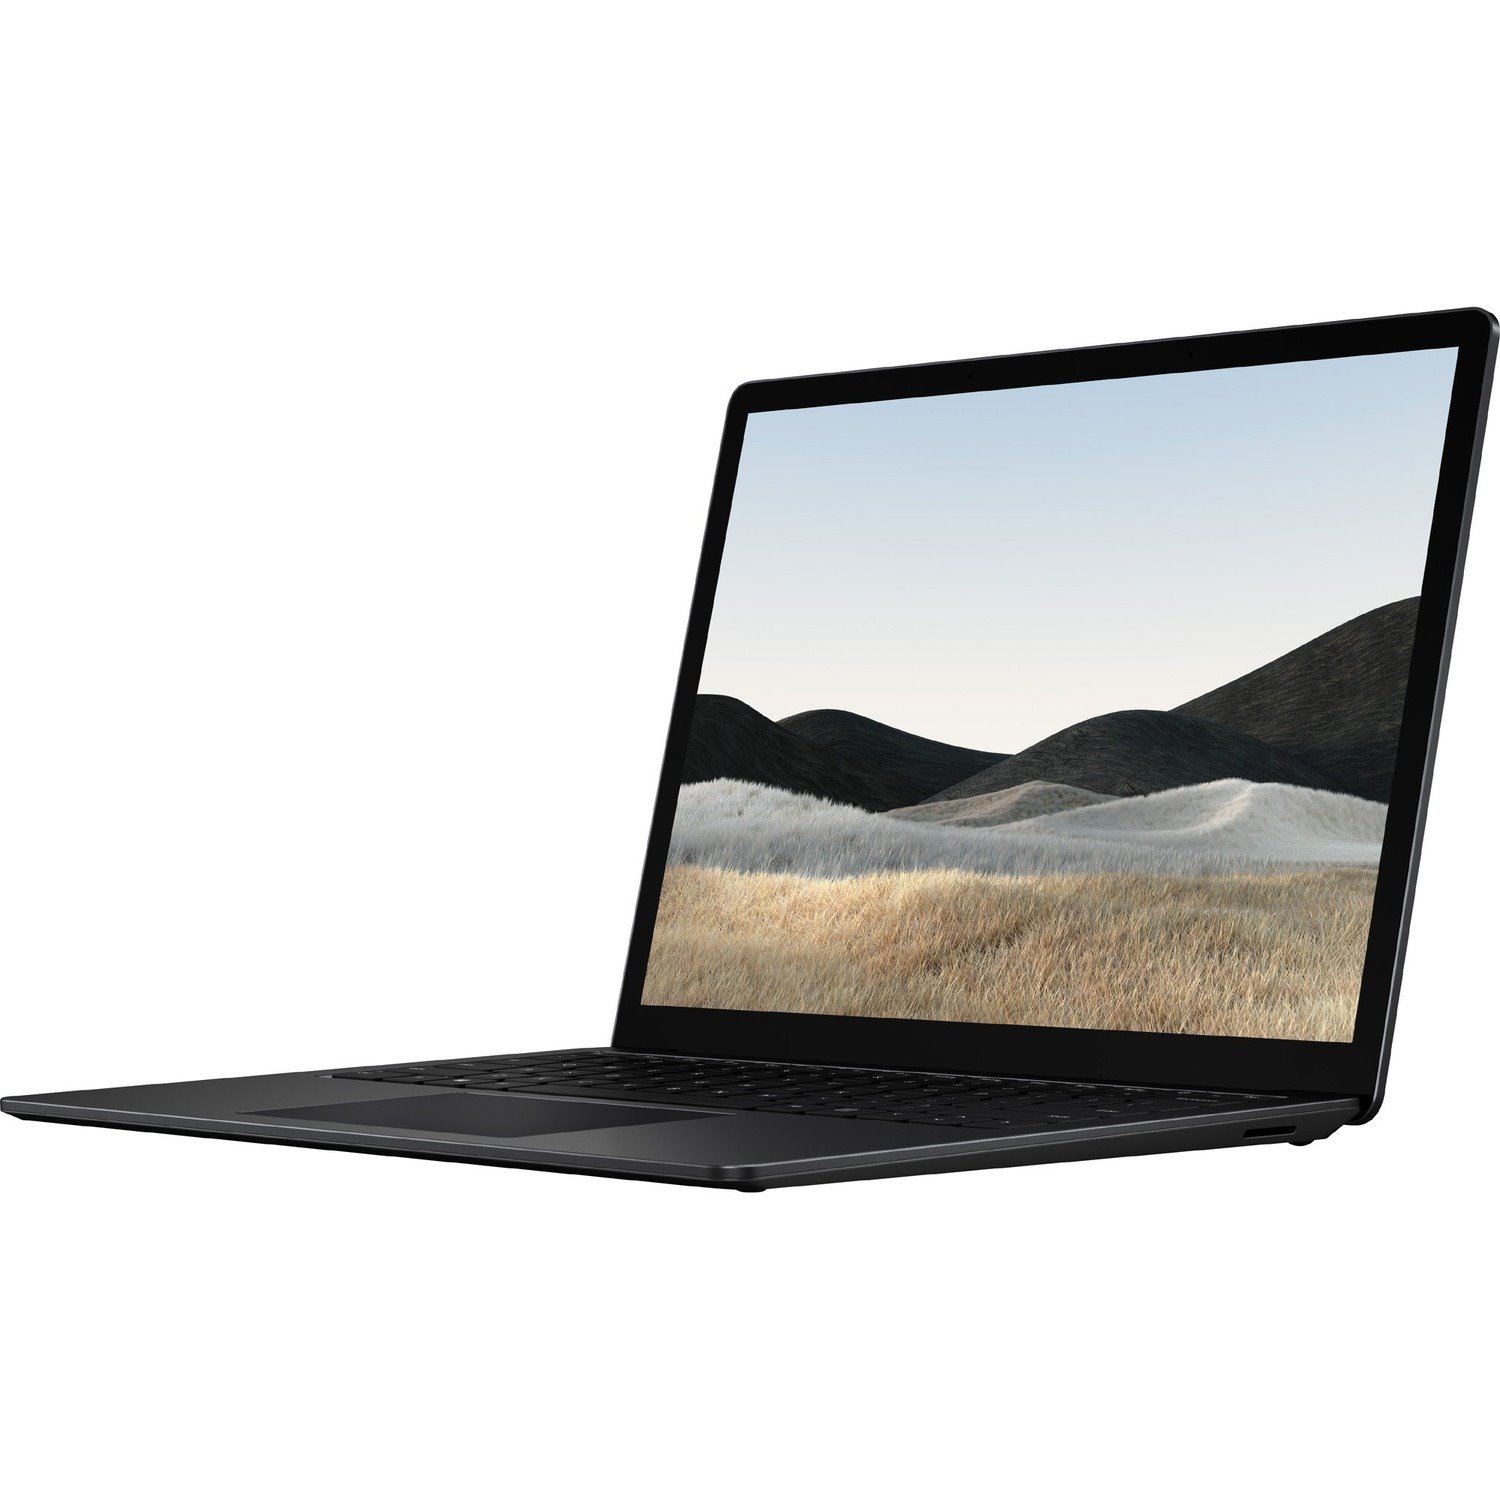 Microsoft Surface Laptop 4 34.3 cm (13.5") Touchscreen Notebook - 2256 x 1504 - AMD Ryzen 5 - 16 GB Total RAM - 256 GB SSD - Matte Black